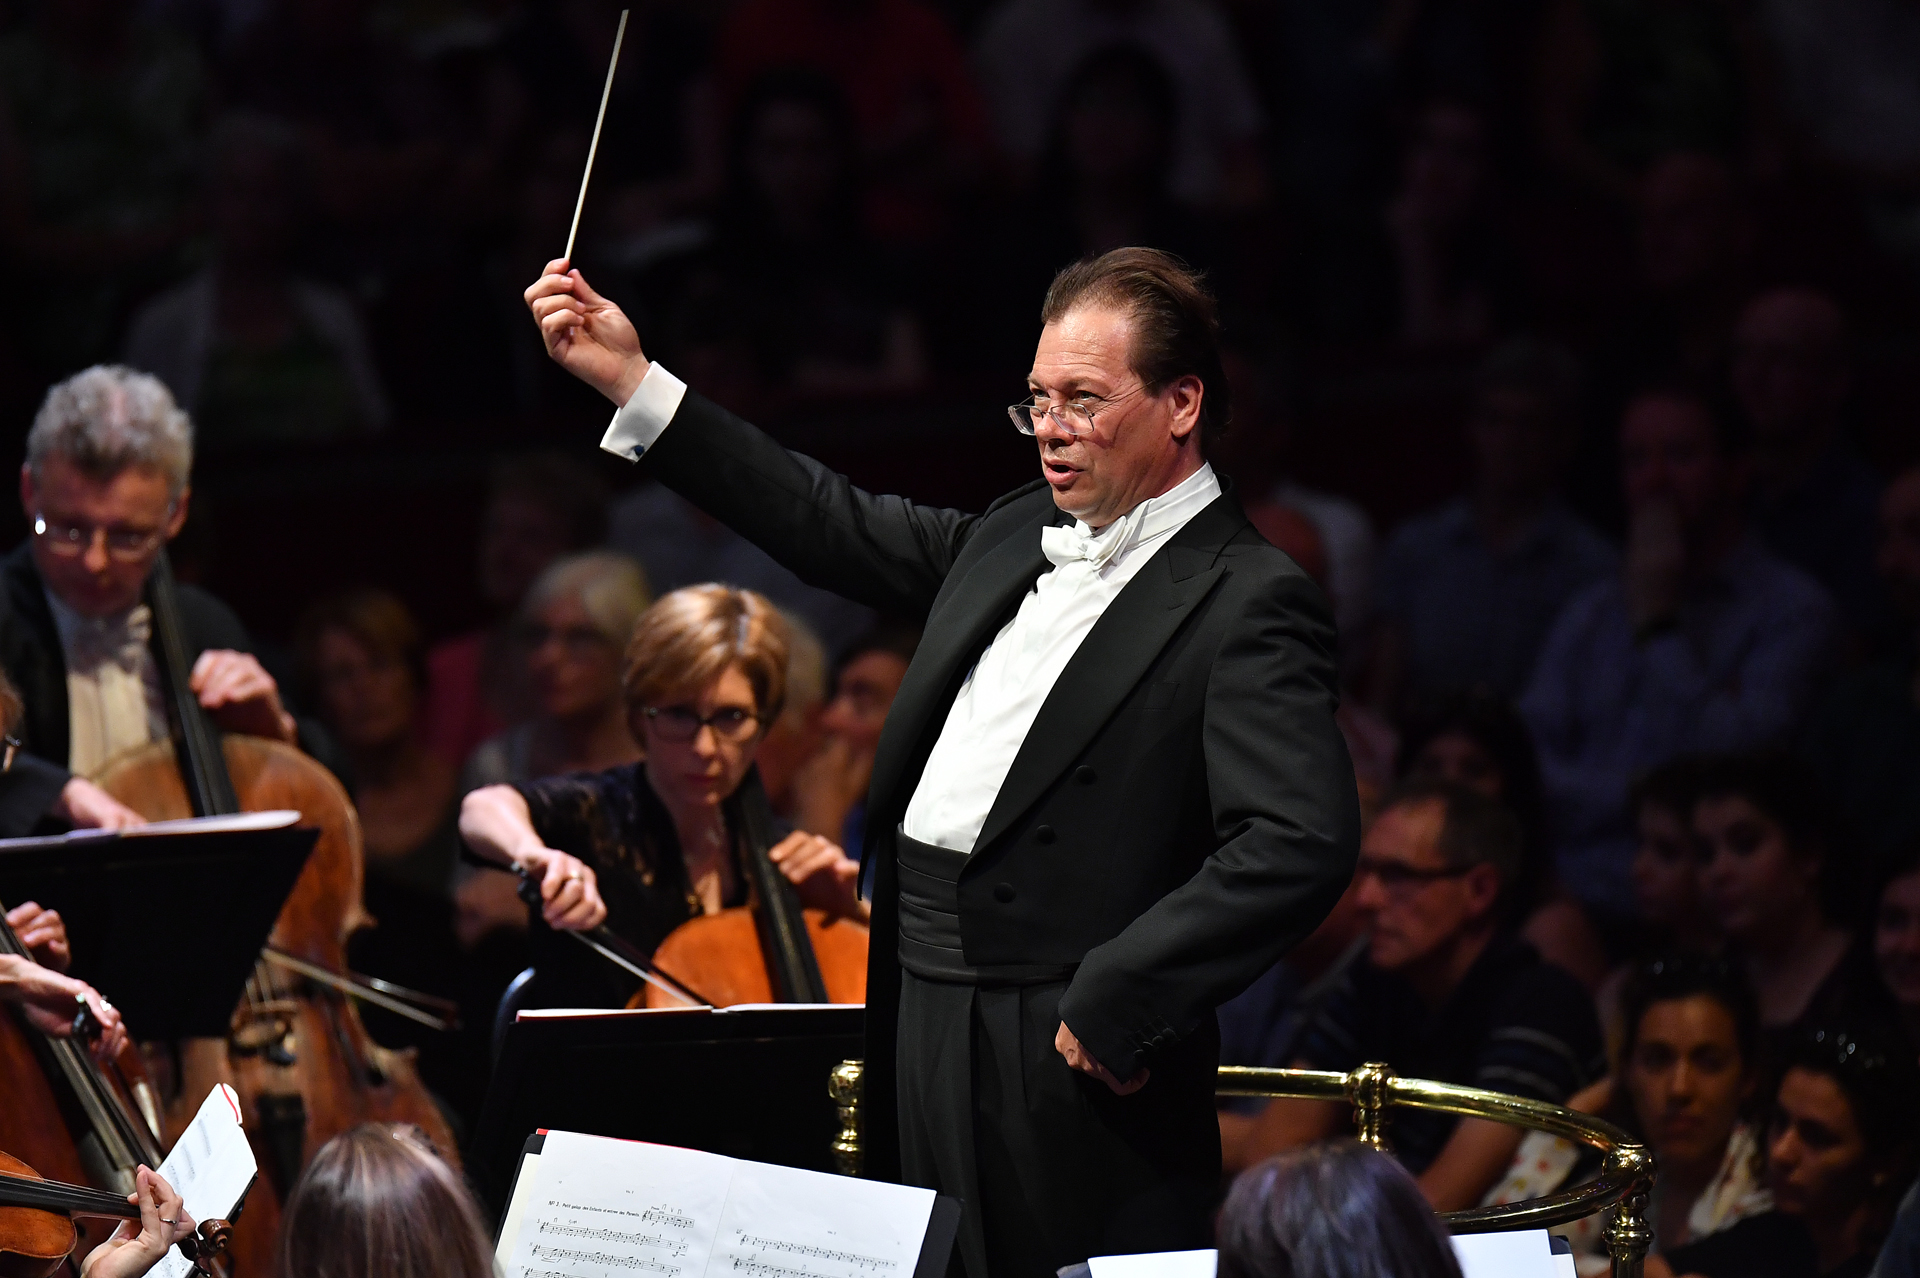 Alexander Vedernikov conducting the BBC Symphony Orchestra